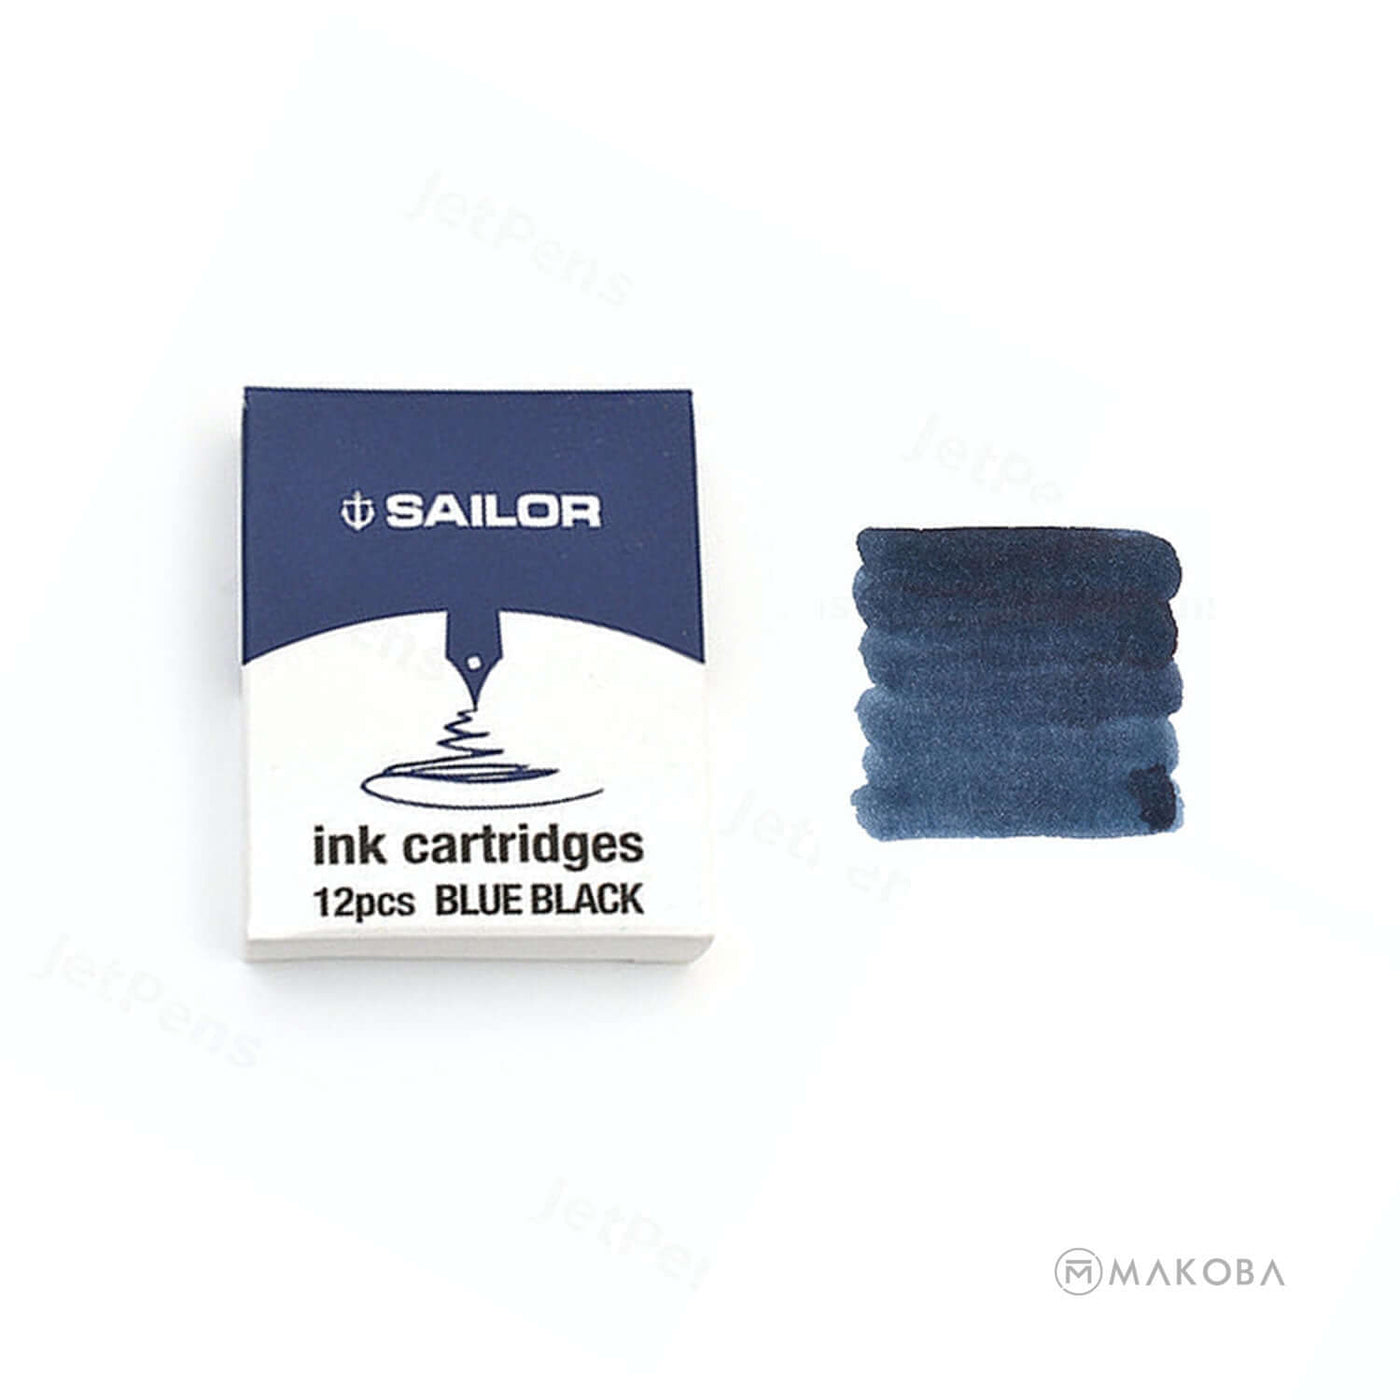 SAILOR DYE BASED BLUE BLACK INK CARTRIDGE PACK OF 12